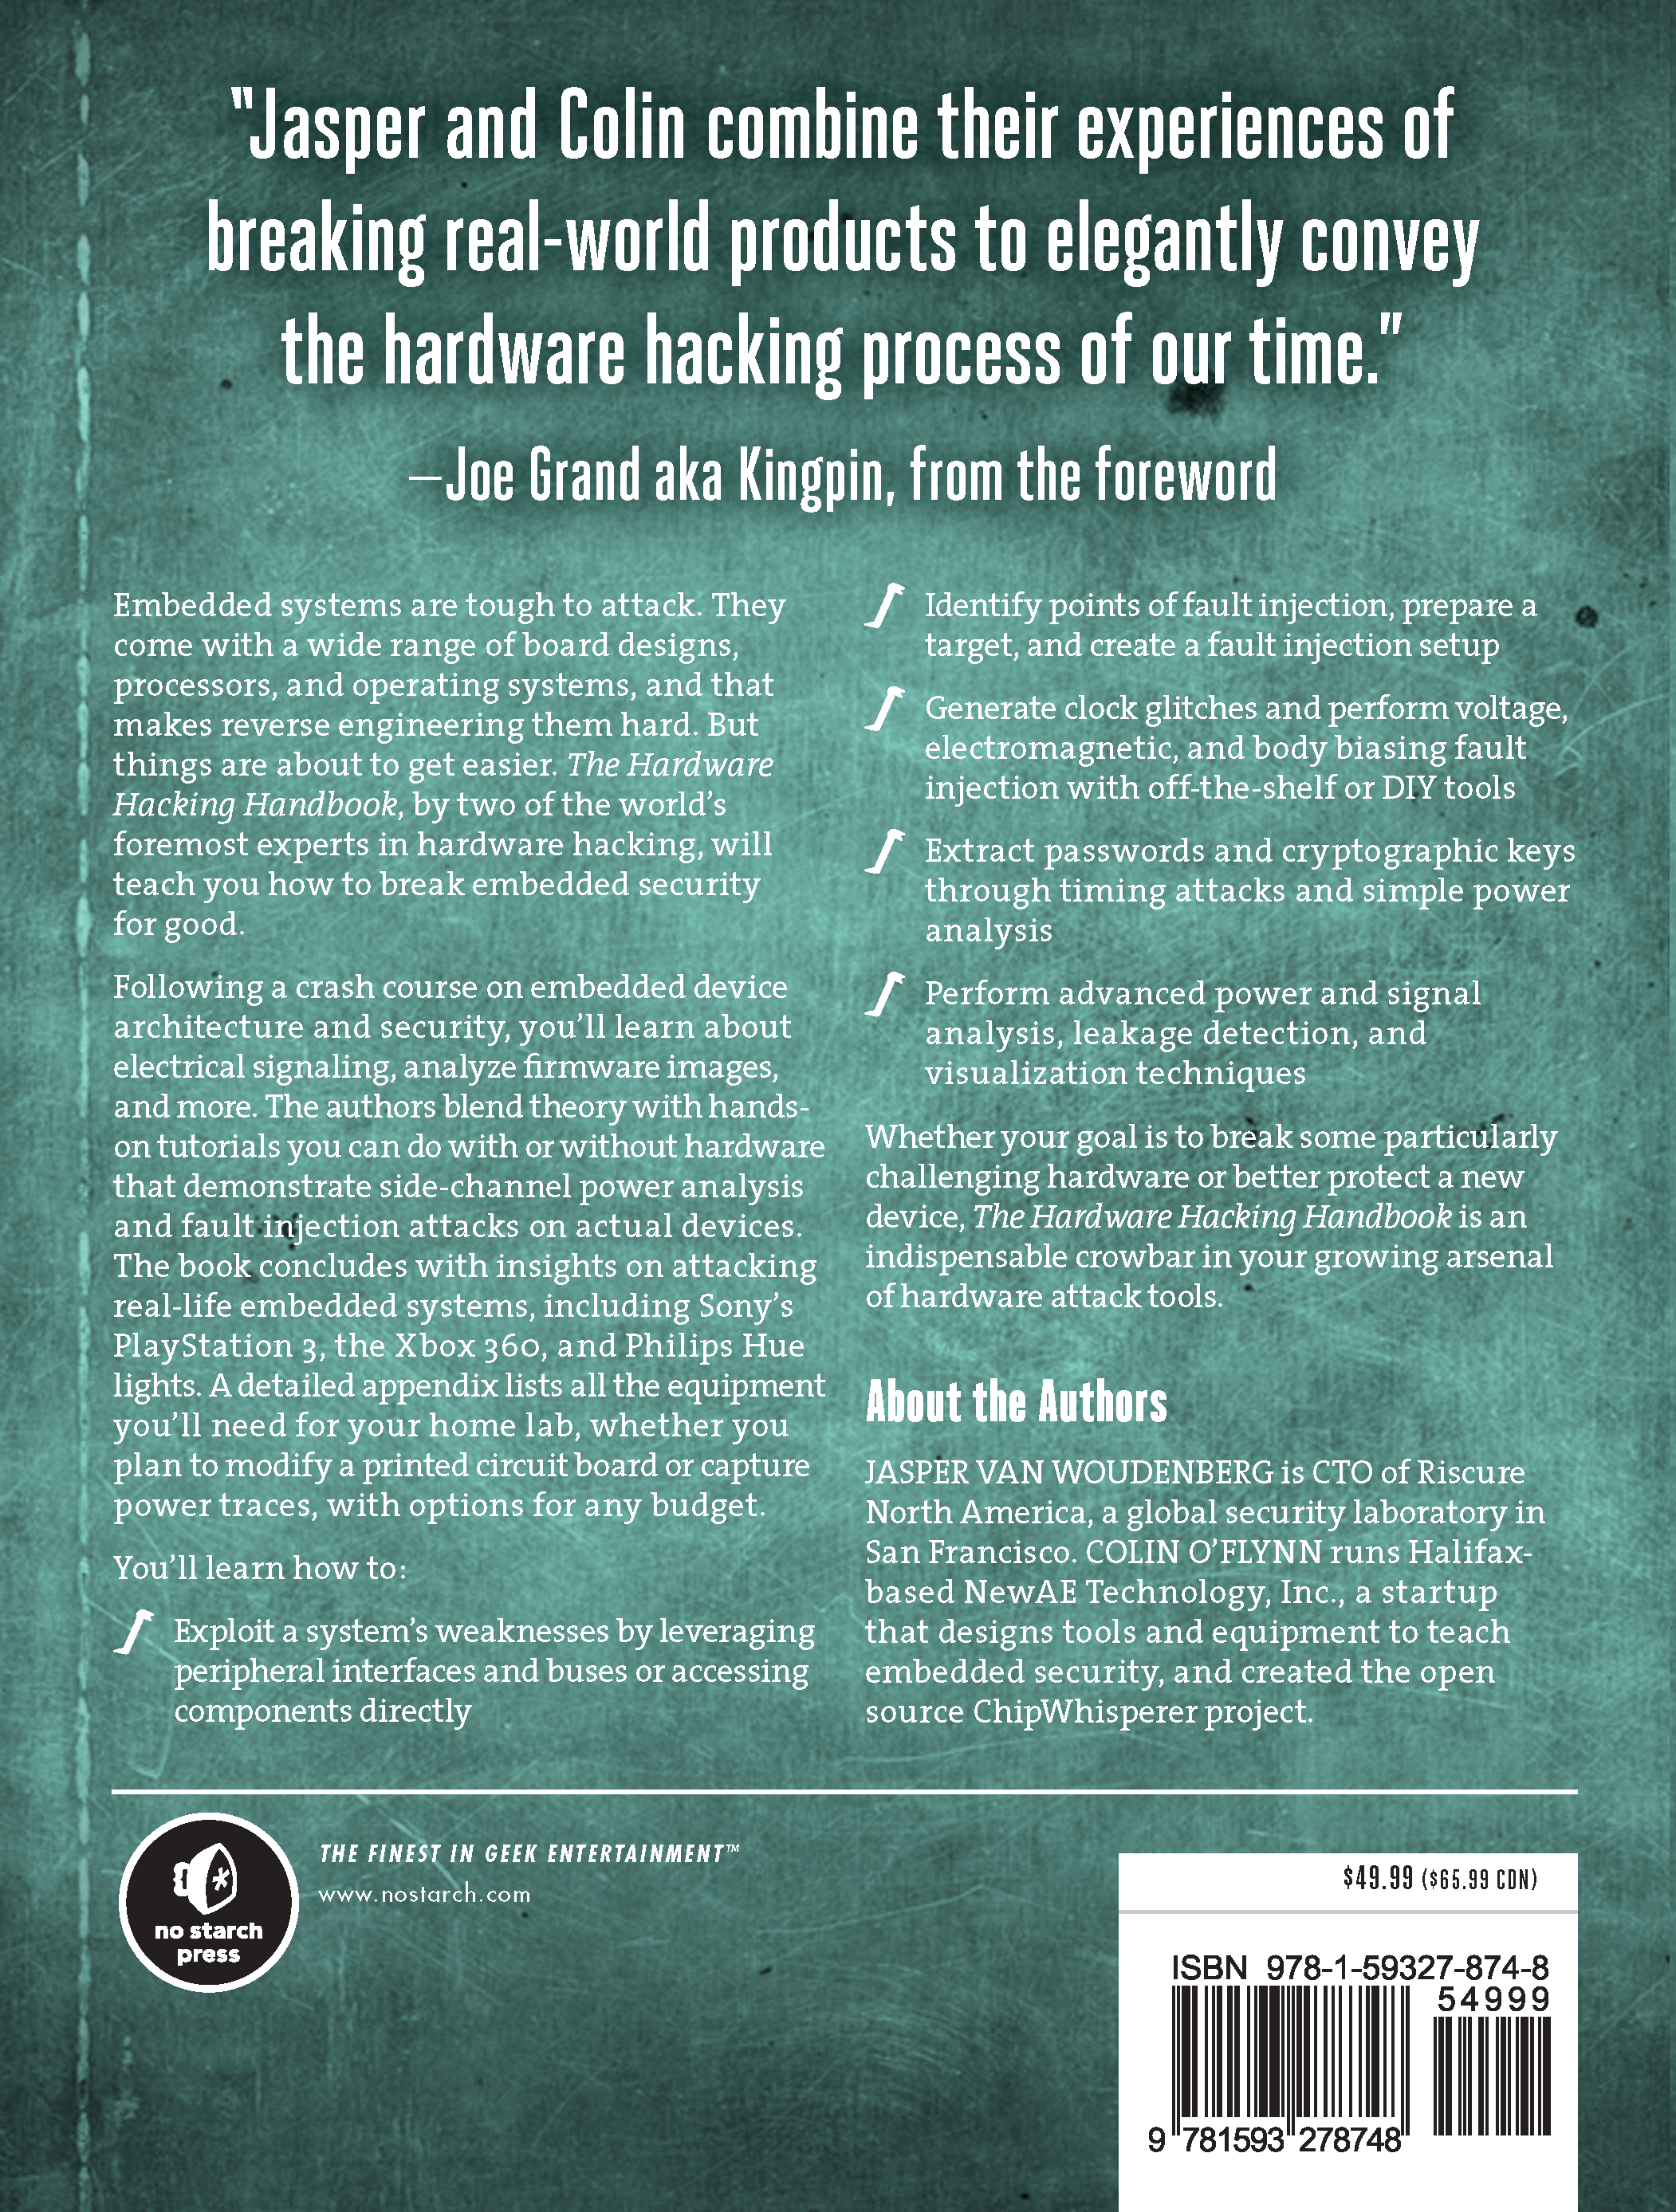 The Hardware Hacking Handbook back cover